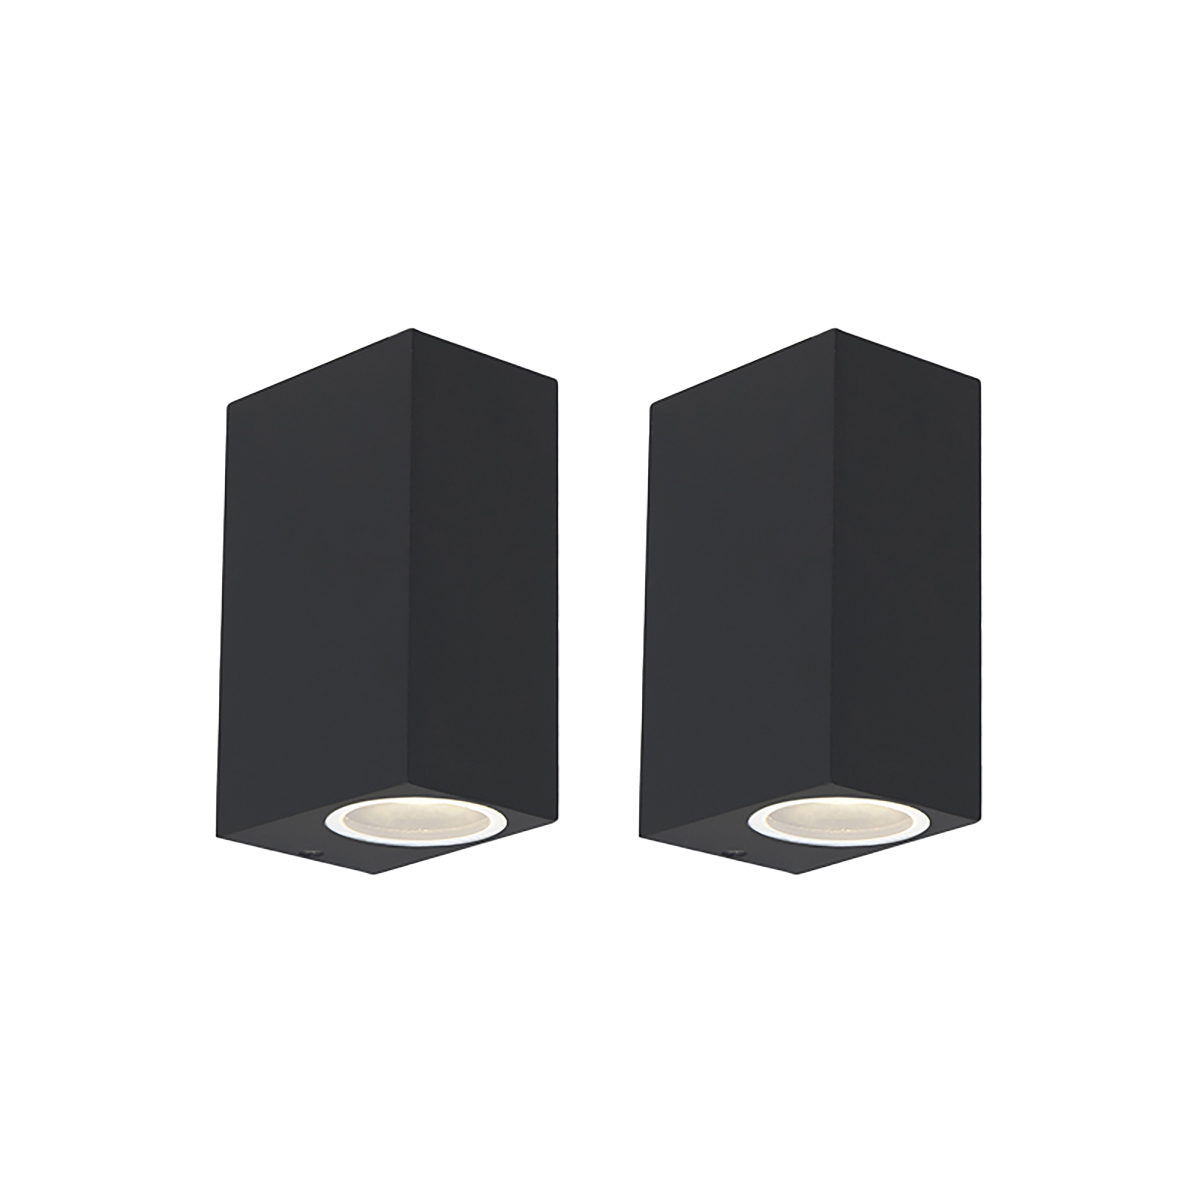 Set van 2 moderne wandlampen zwart 2-lichts IP44 - Baleno